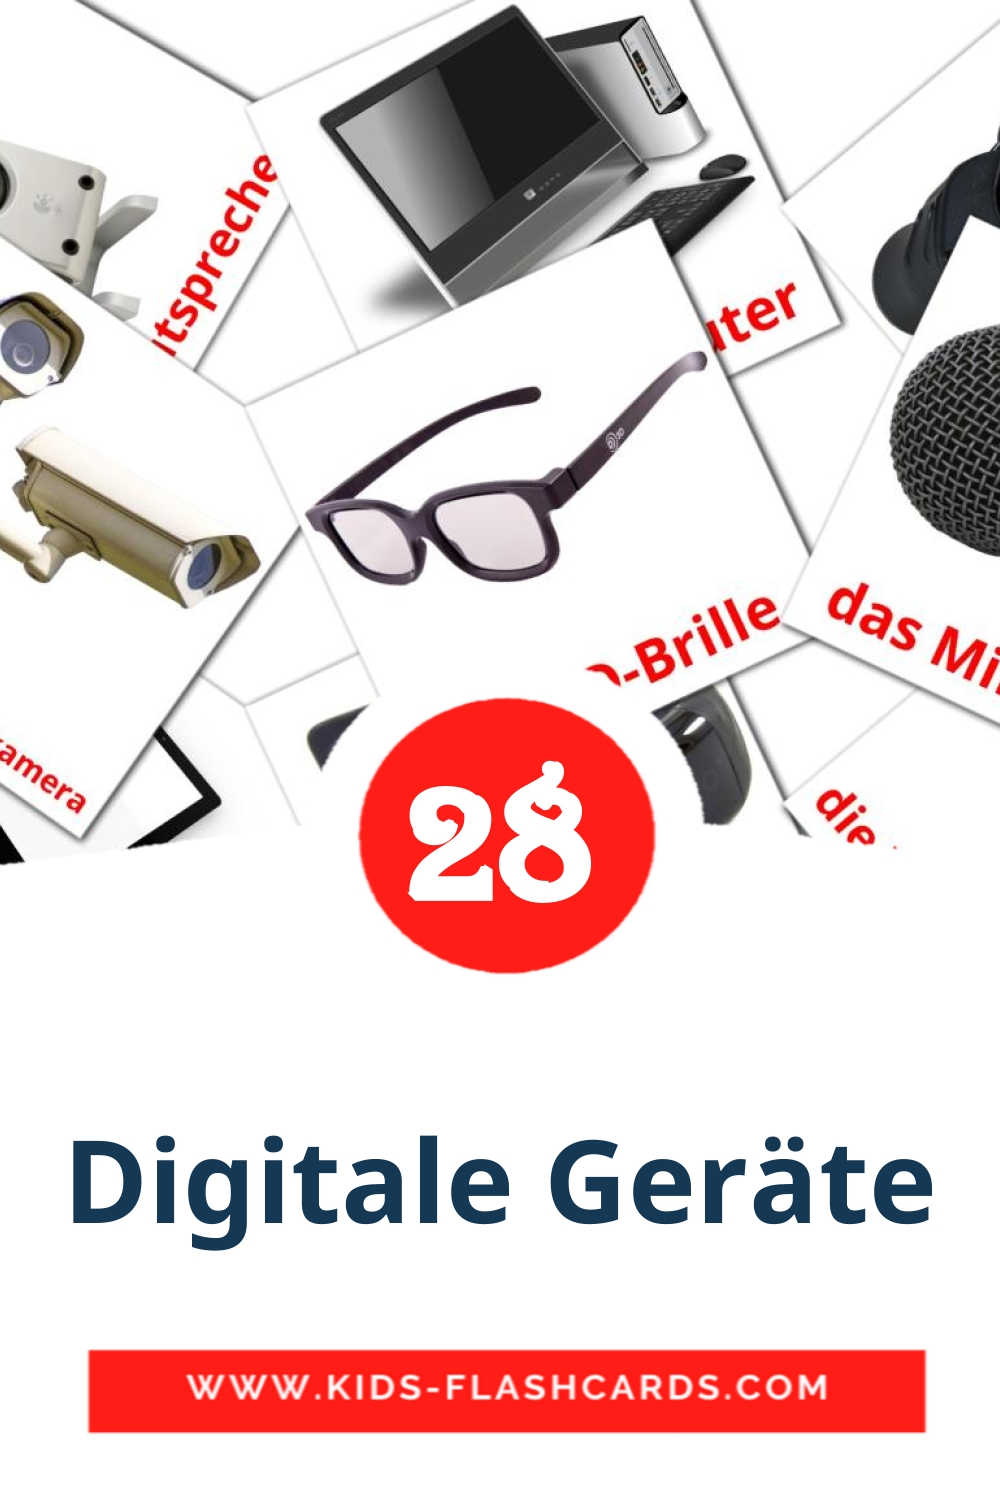 29 Digitale Geräte Picture Cards for Kindergarden in german